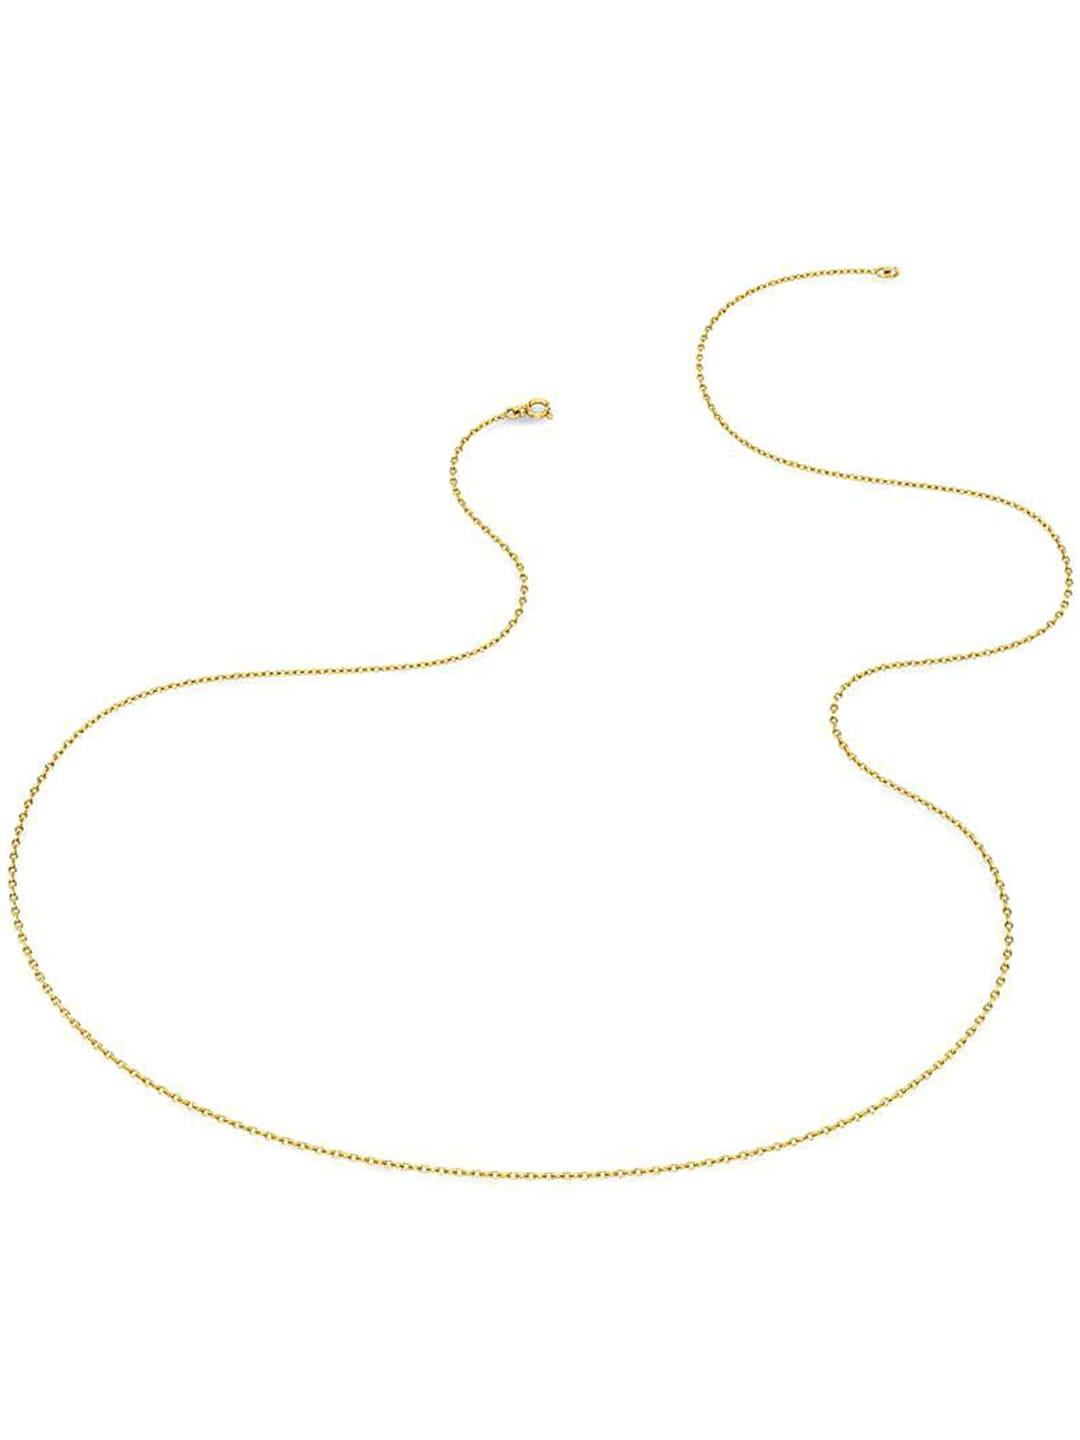 candere a kalyan jewellers company 18kt bis hallmark gold chain-2.28gm